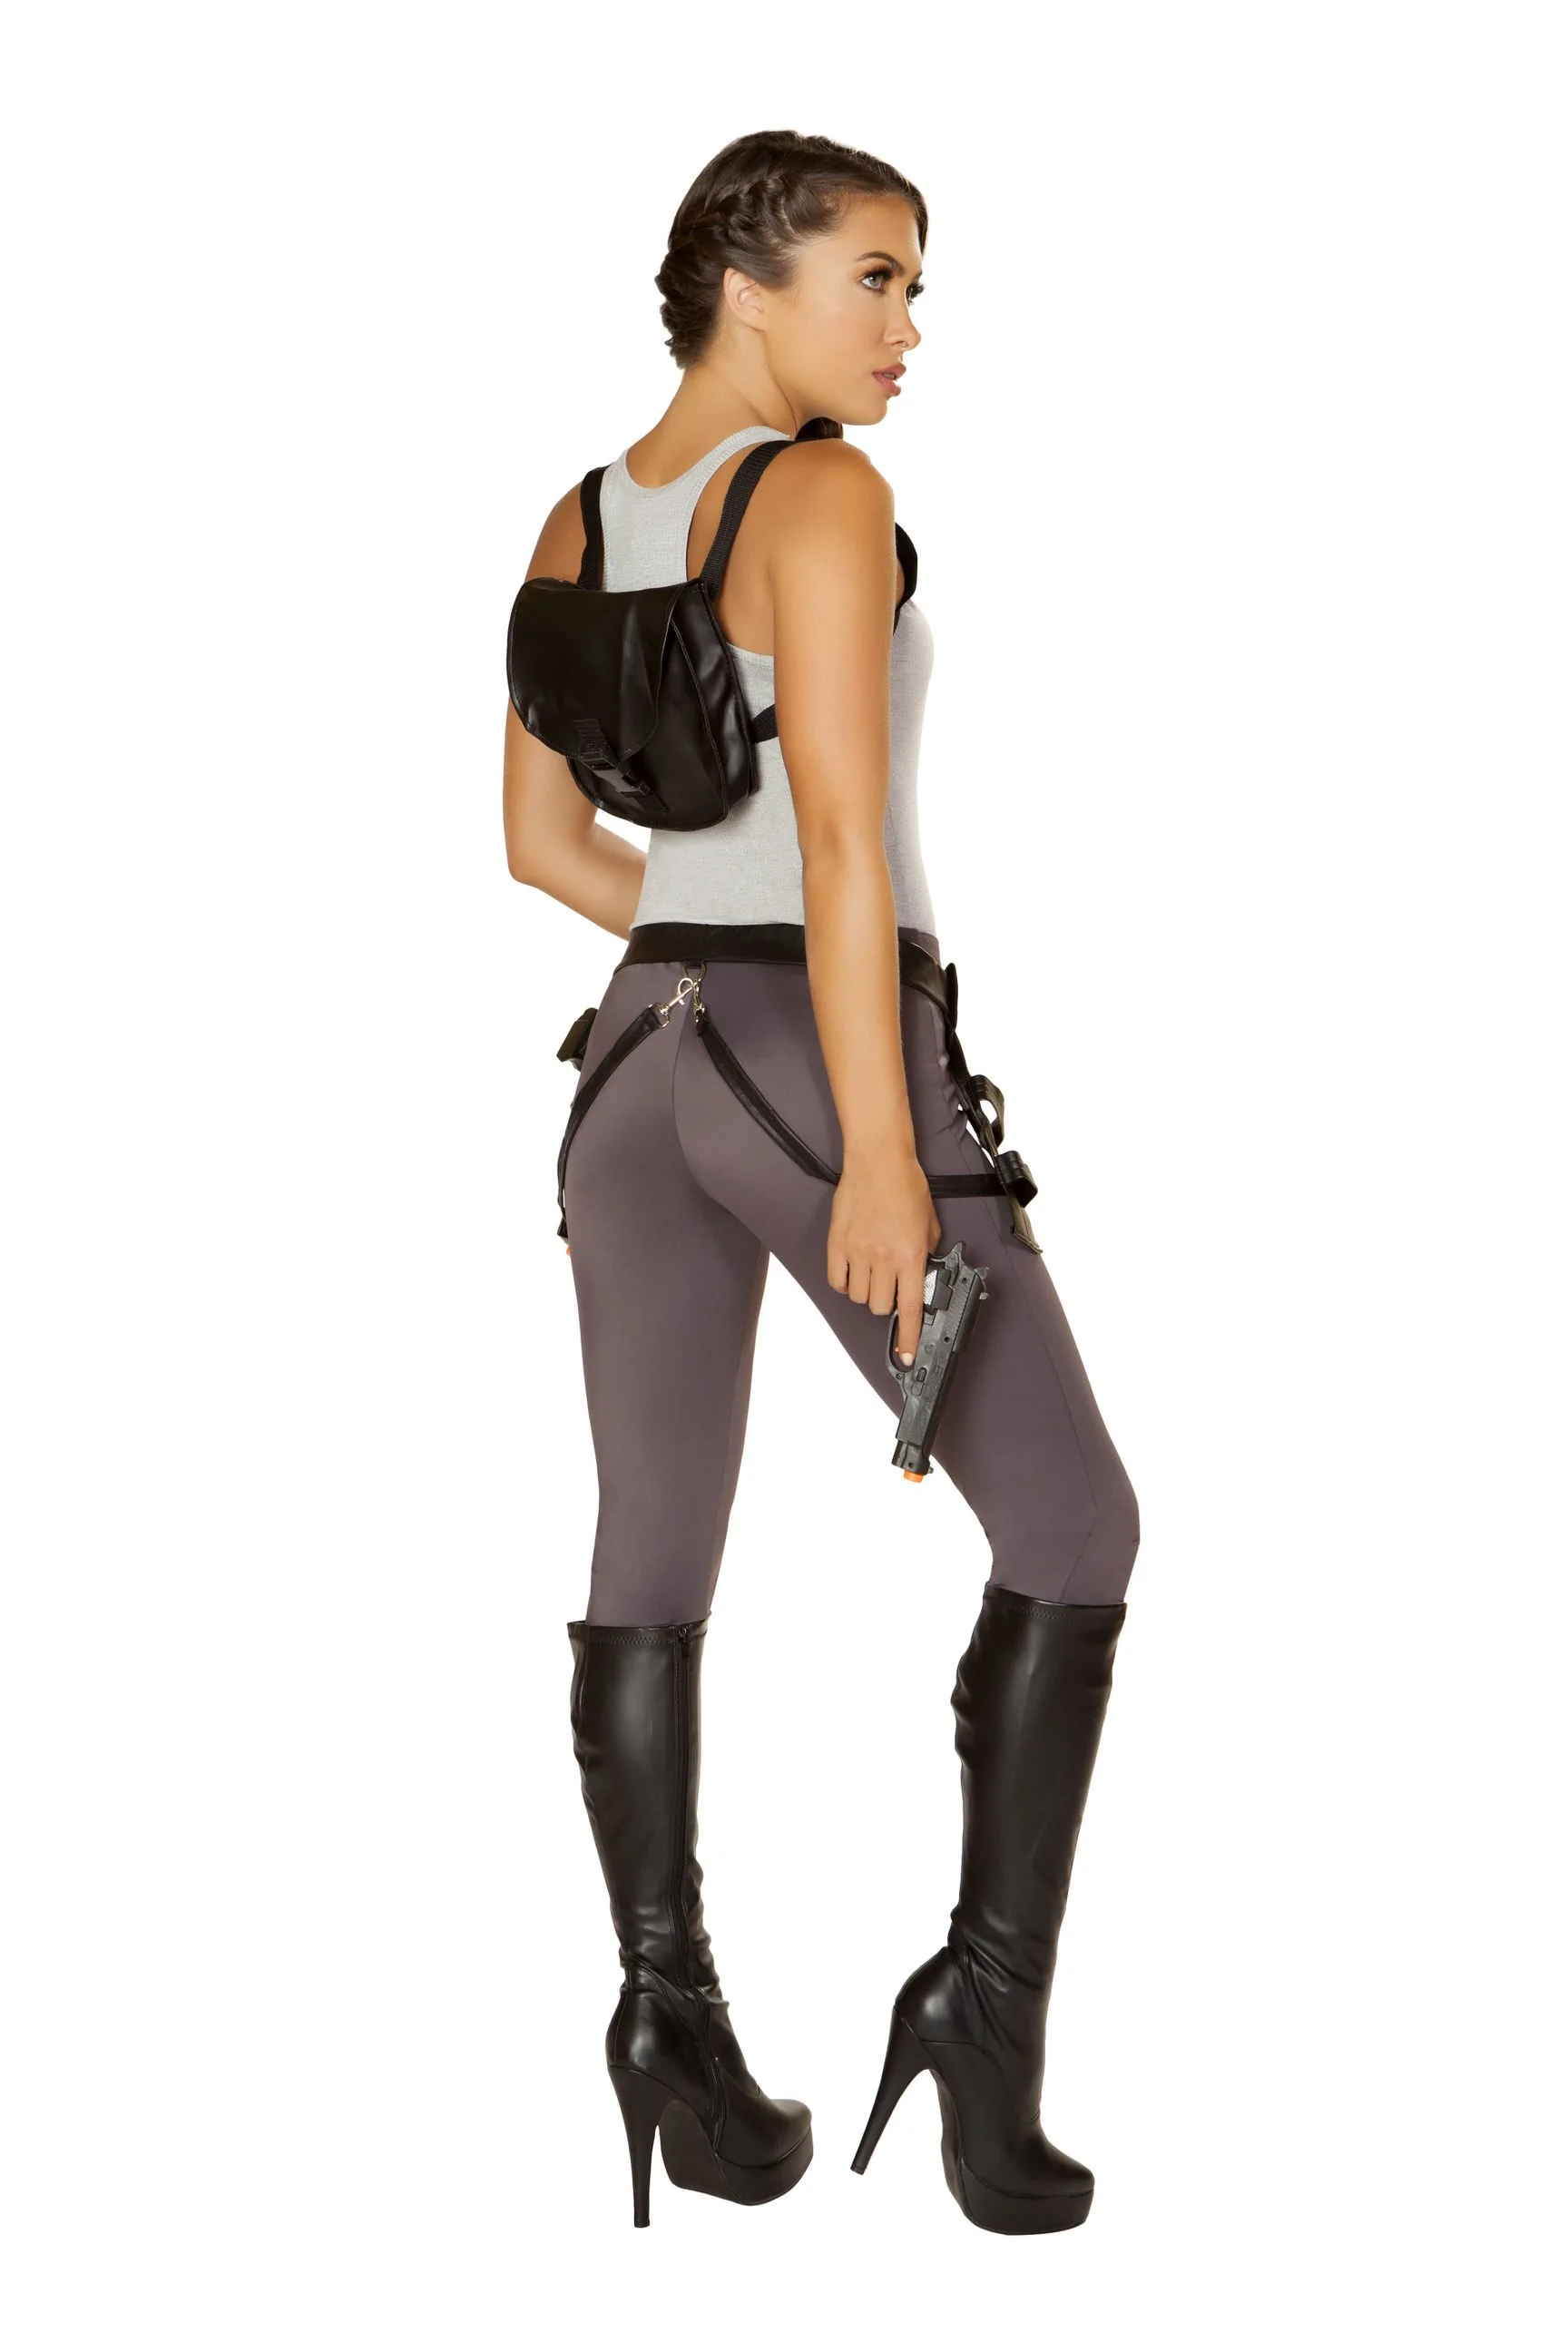 5PC Lara Croft Costume for Women Back View